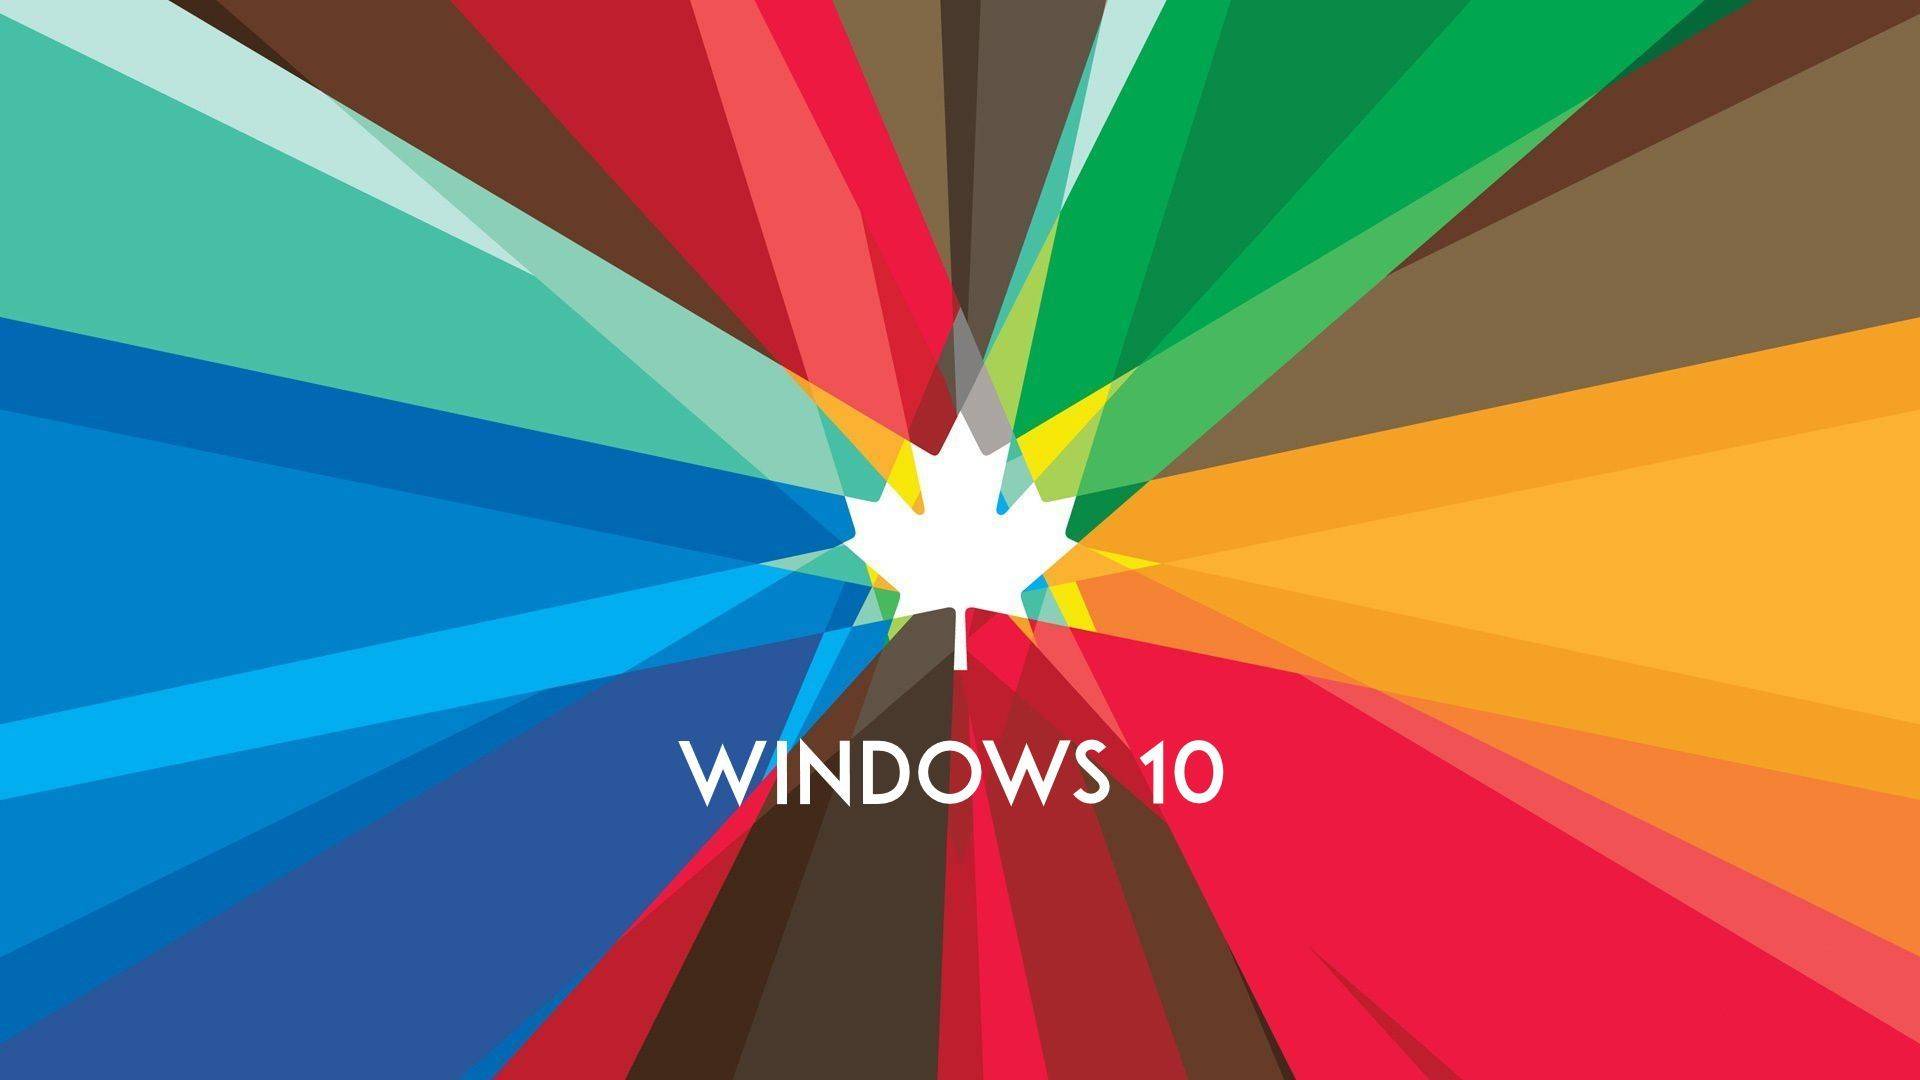 Windows-10-Wallpaper-41-1920x1080.jpg